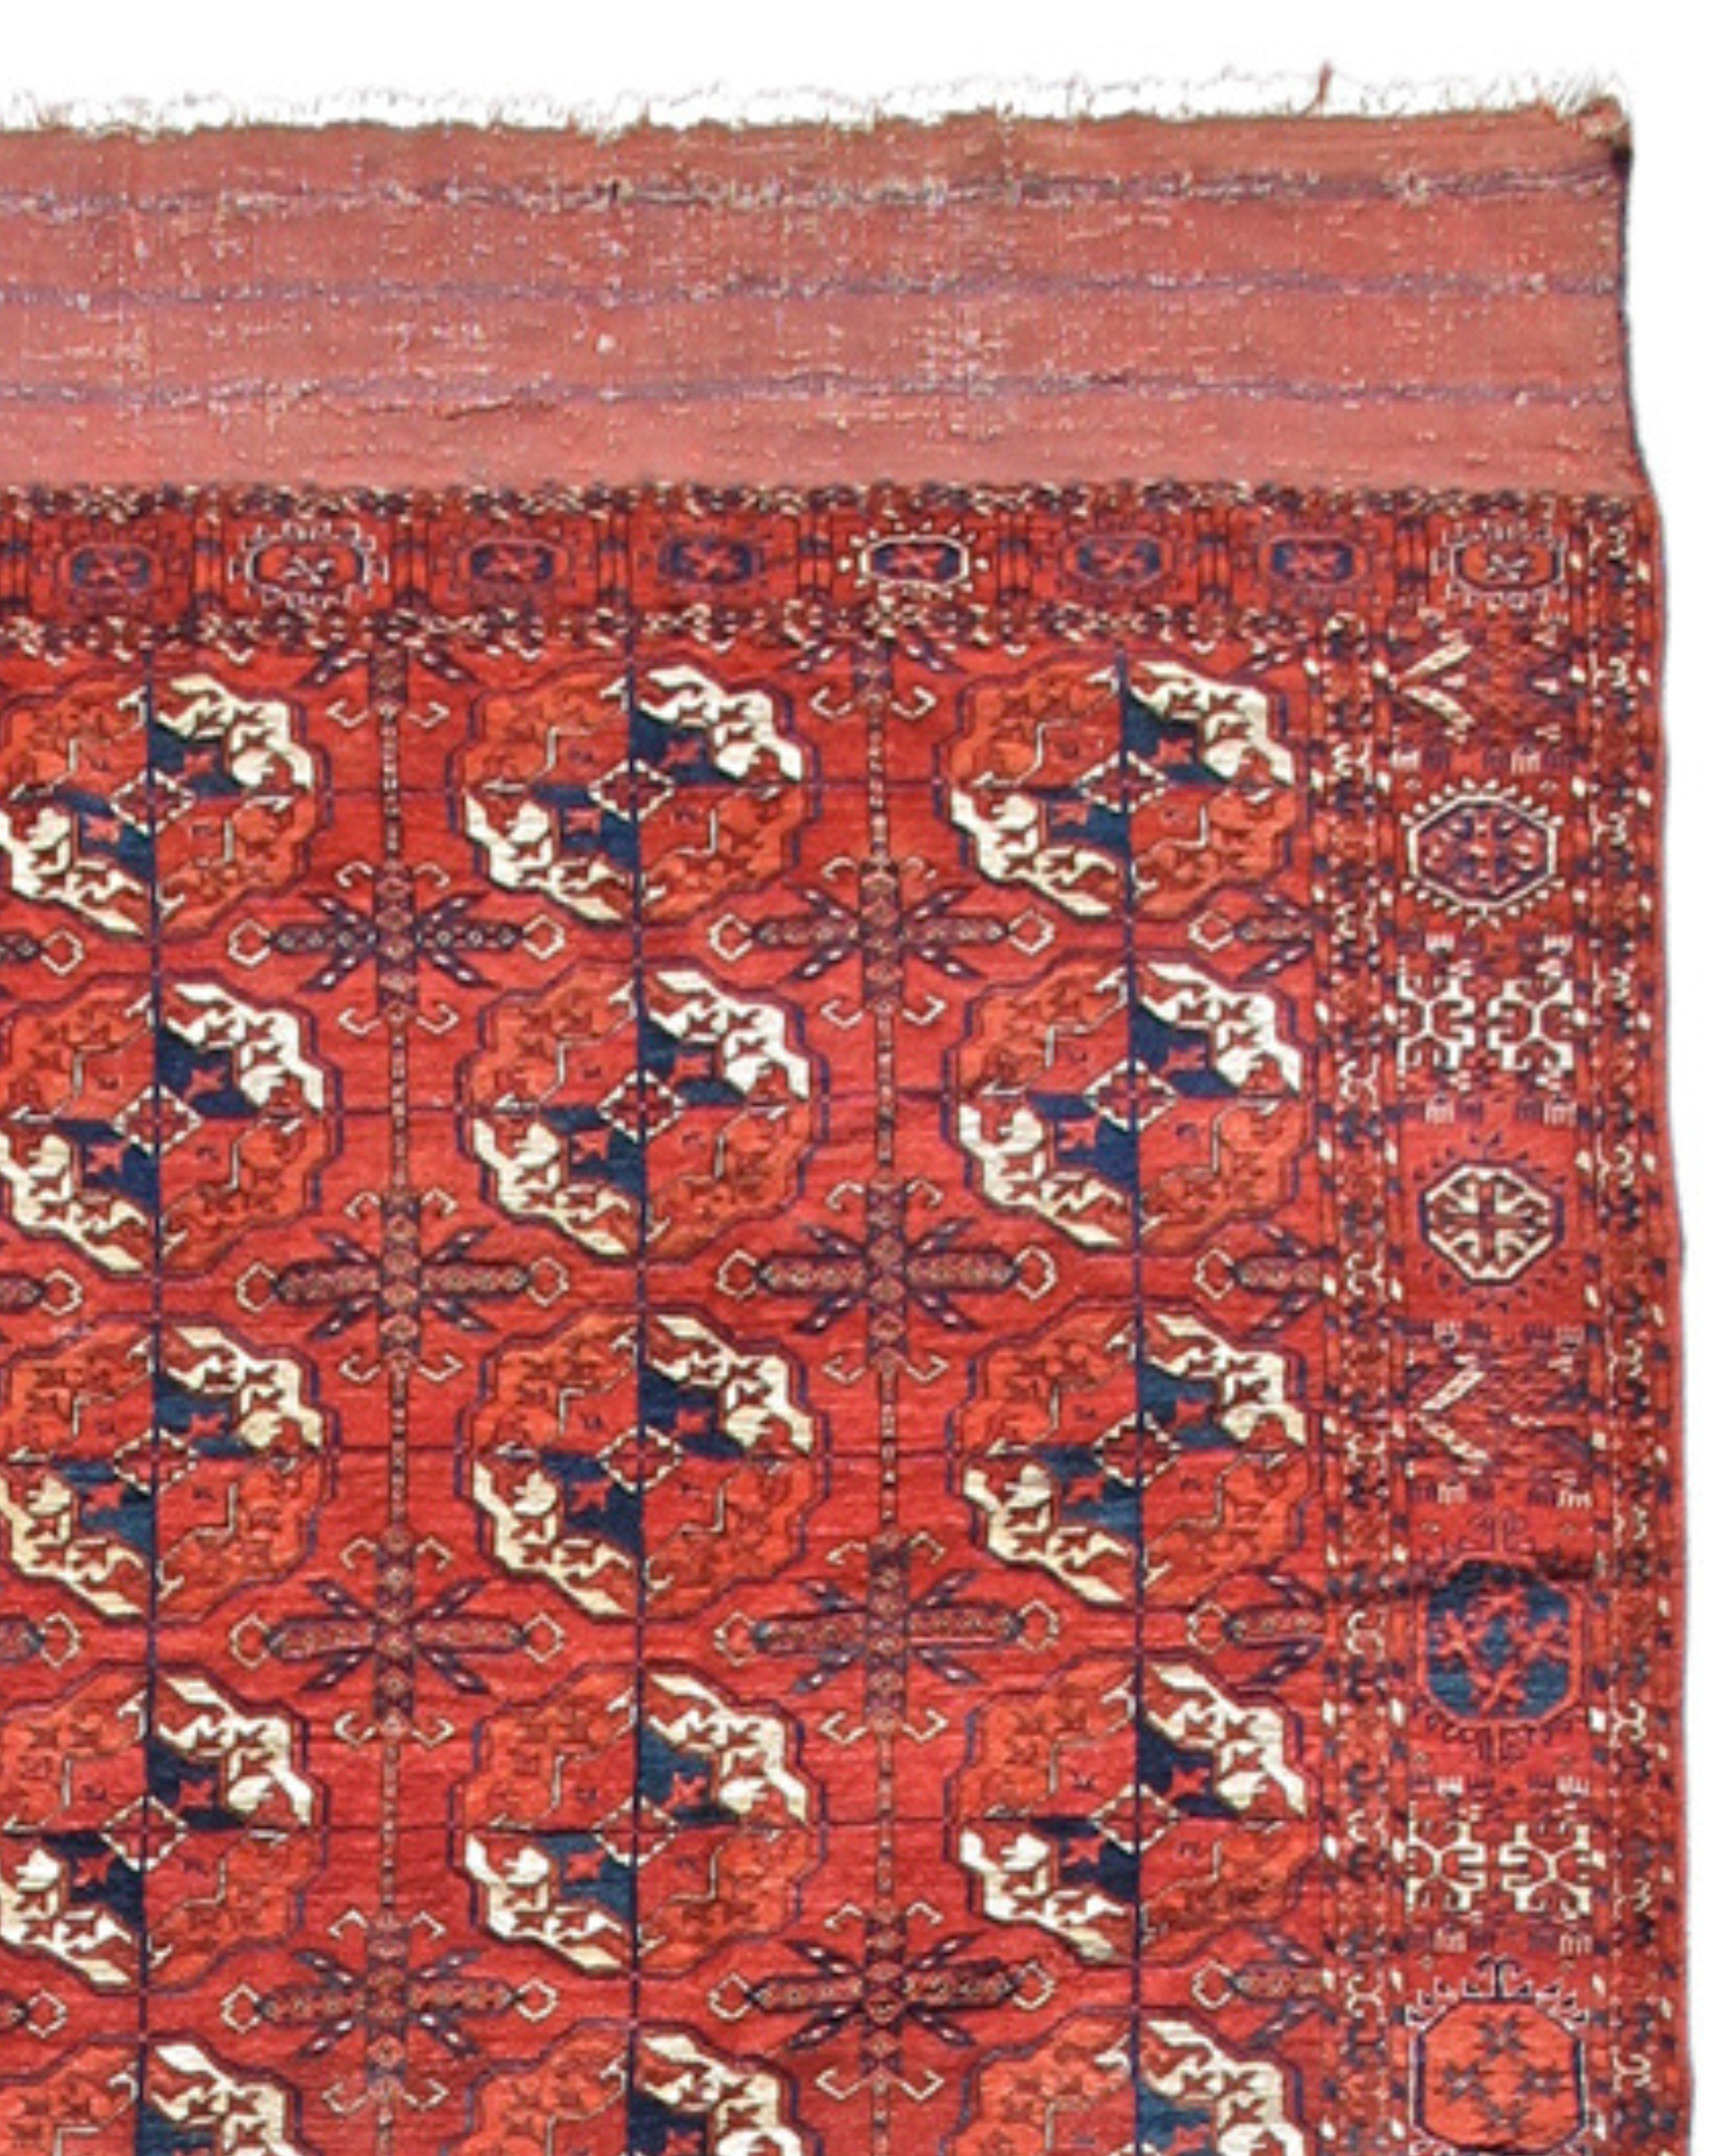 Antique Turkmen Tekke Main Carpet Rug, Mid-19th Century

Additional information:
Dimensions: 6'3